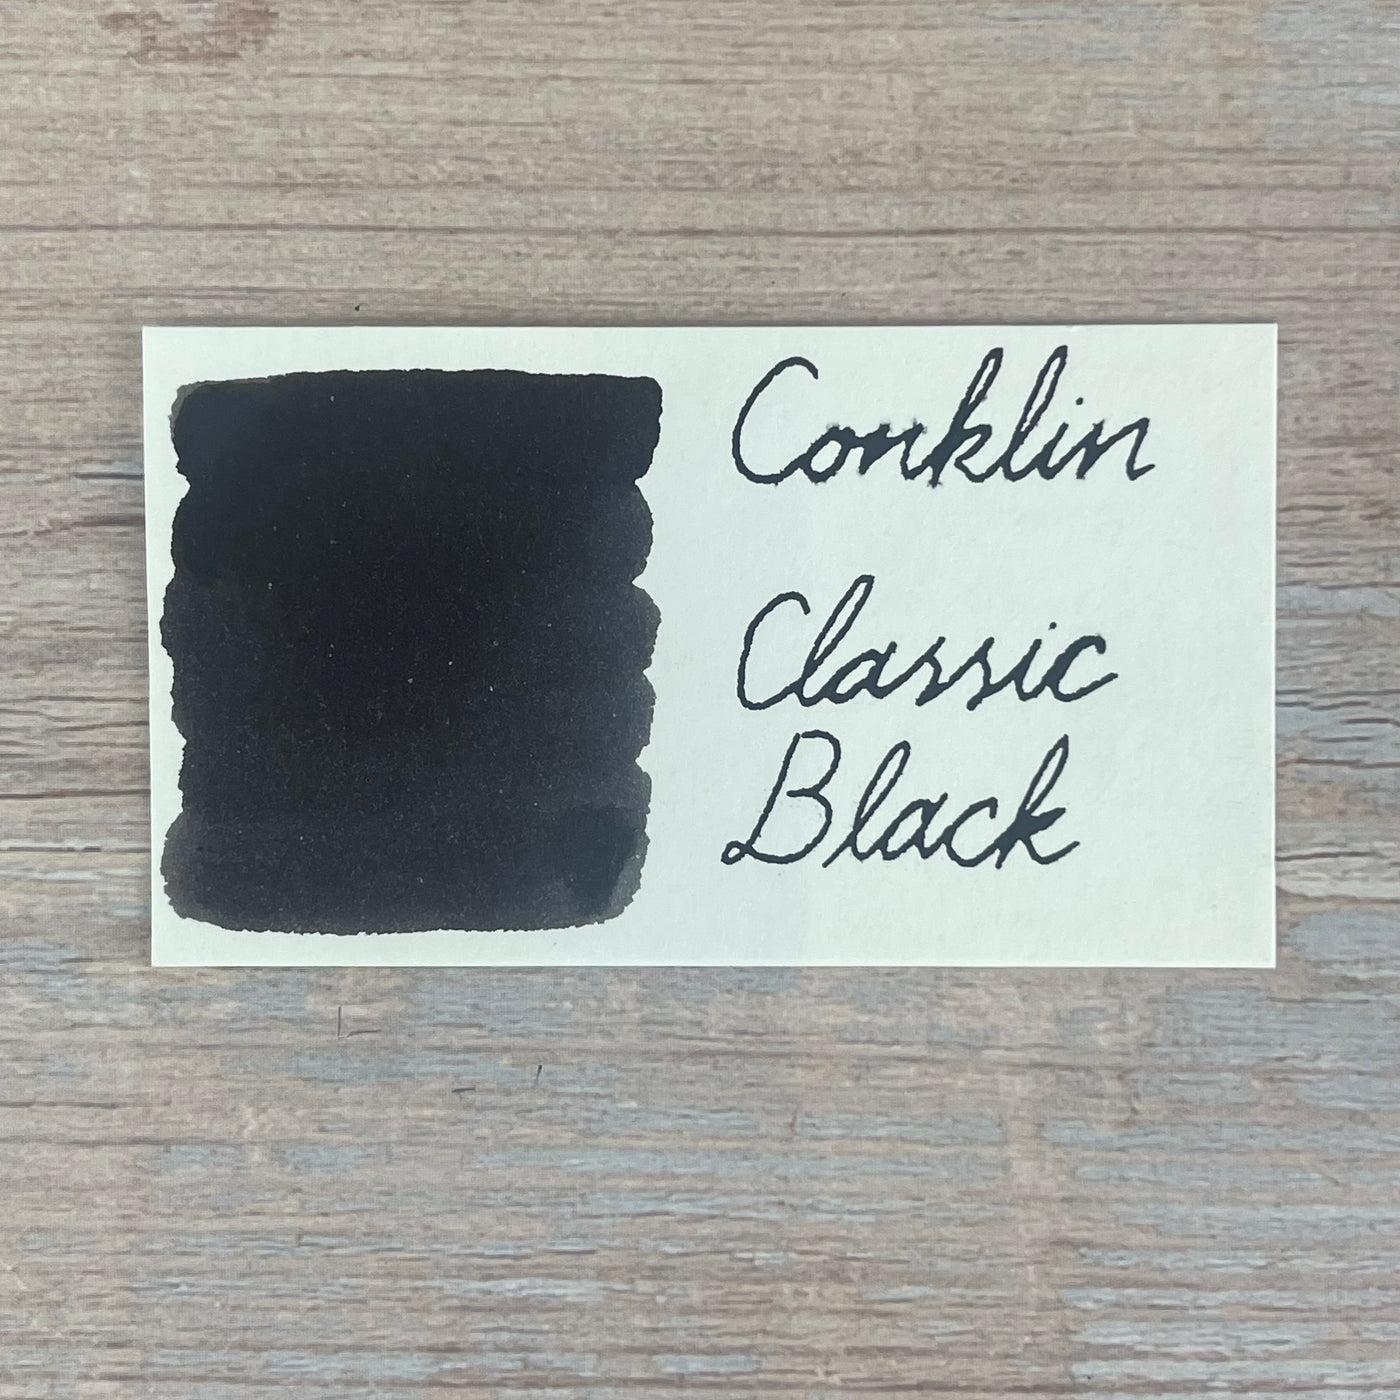 Conklin Classic Black - 60ml Bottled Ink